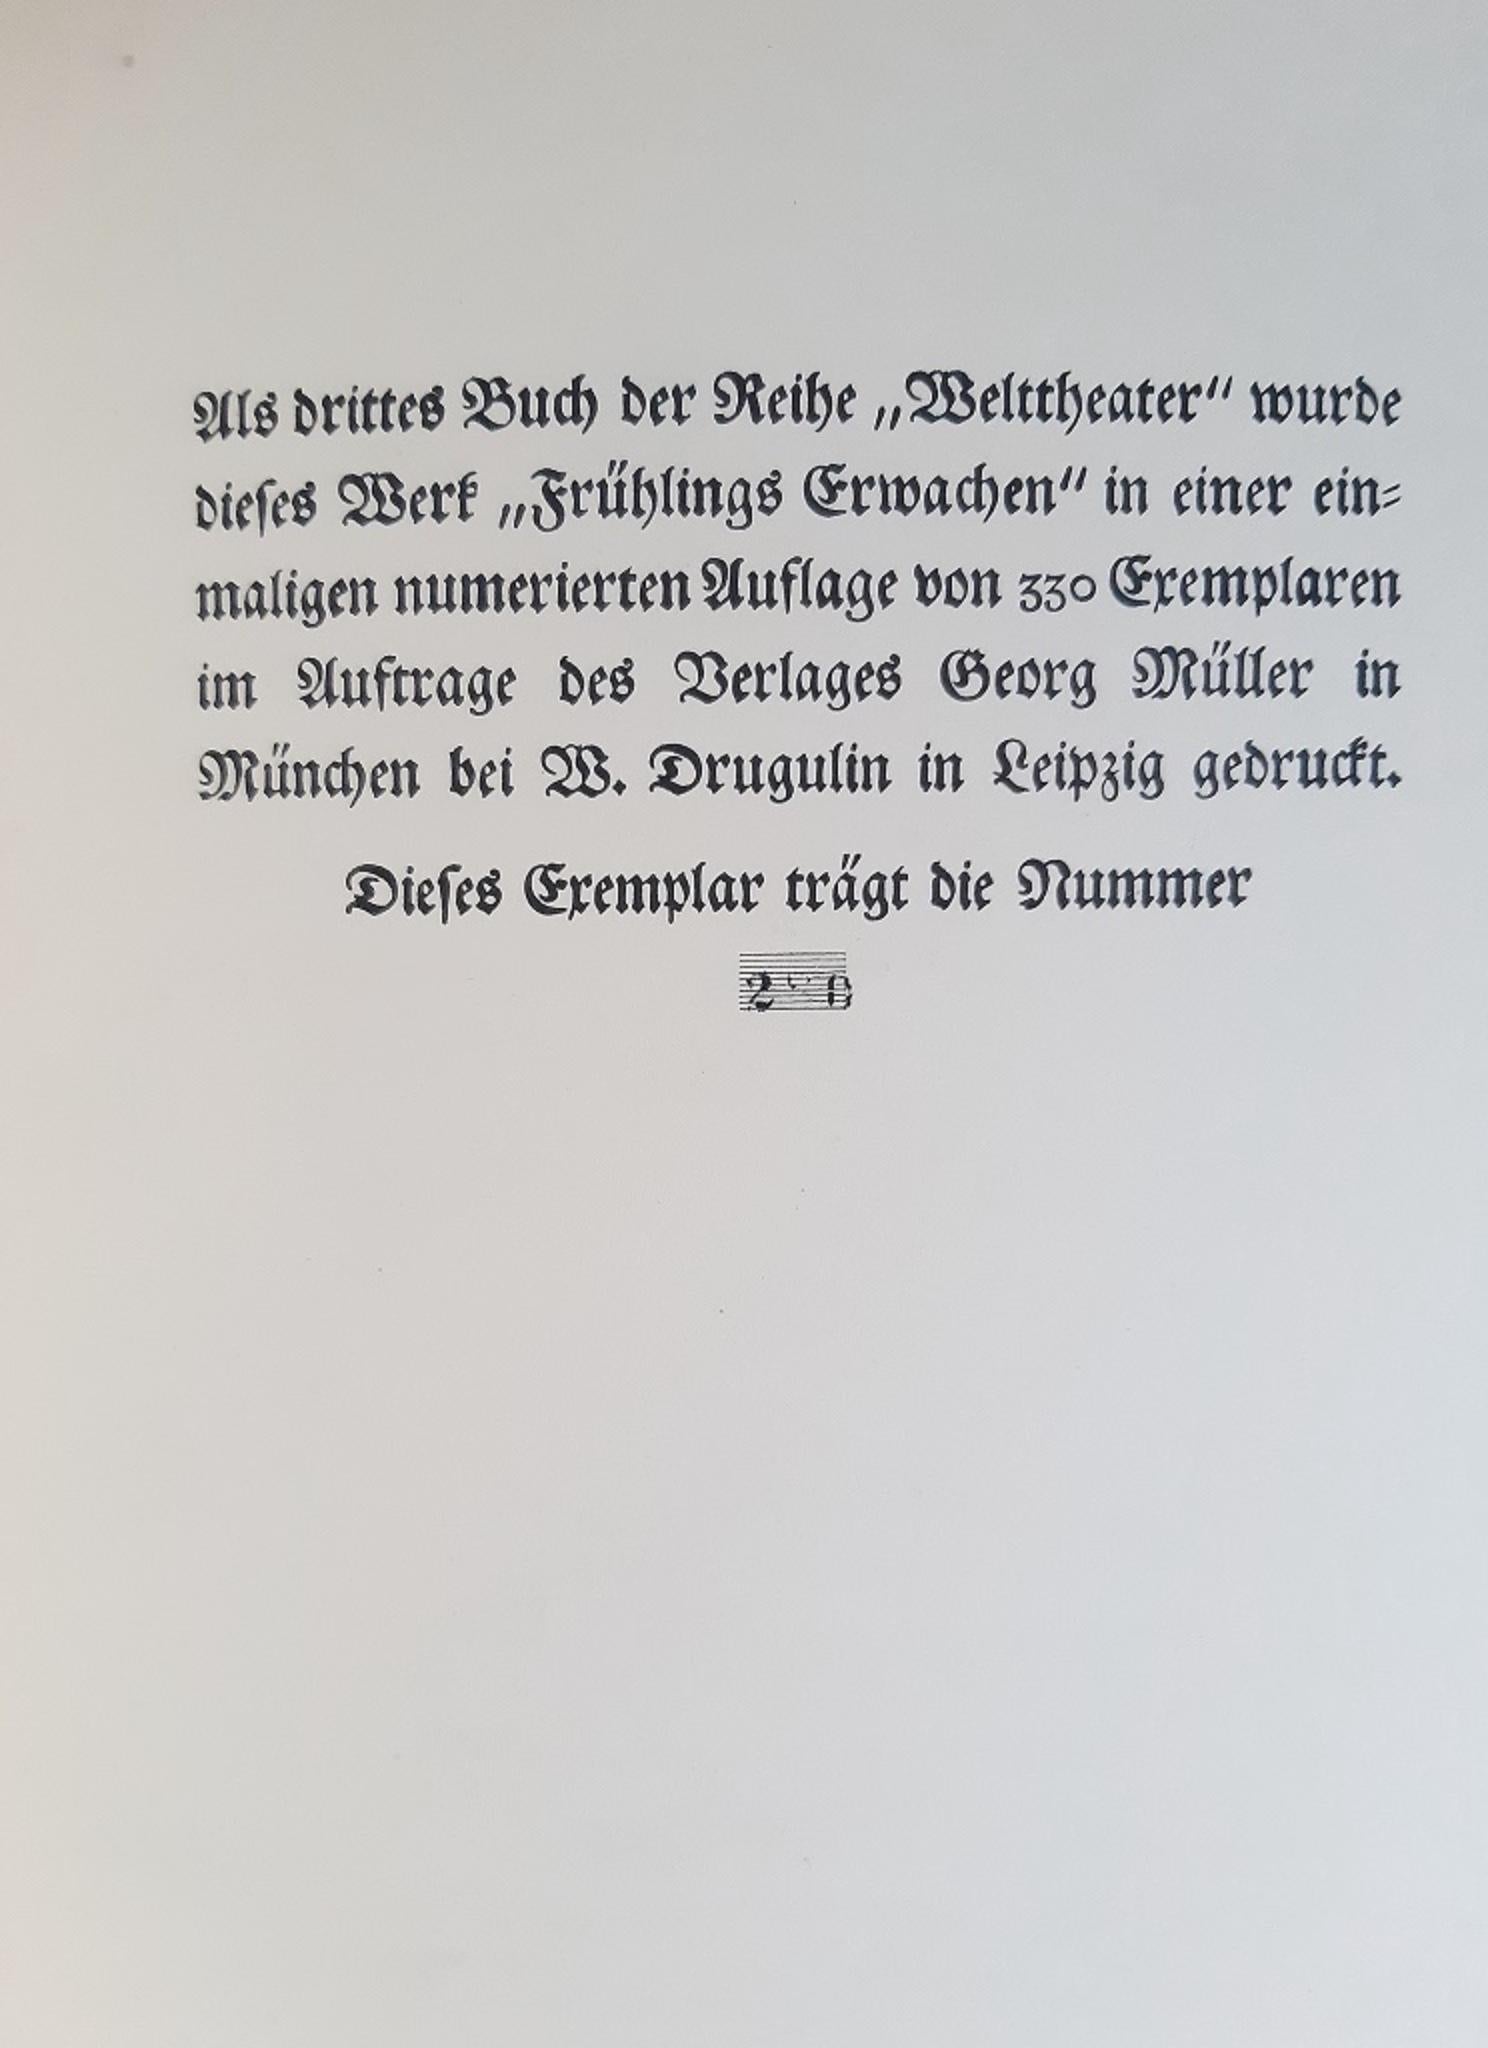 FruhlingsErwachen is an original modern rare book written by Benjamin Franklin Wedekind (1864 – 1918)  and  illustrated by  Willi Geiger (Landshut, 1878 - Munich, 1971) in 1920.

Original Edition.

330 numbered copies

Published by Georg Muller